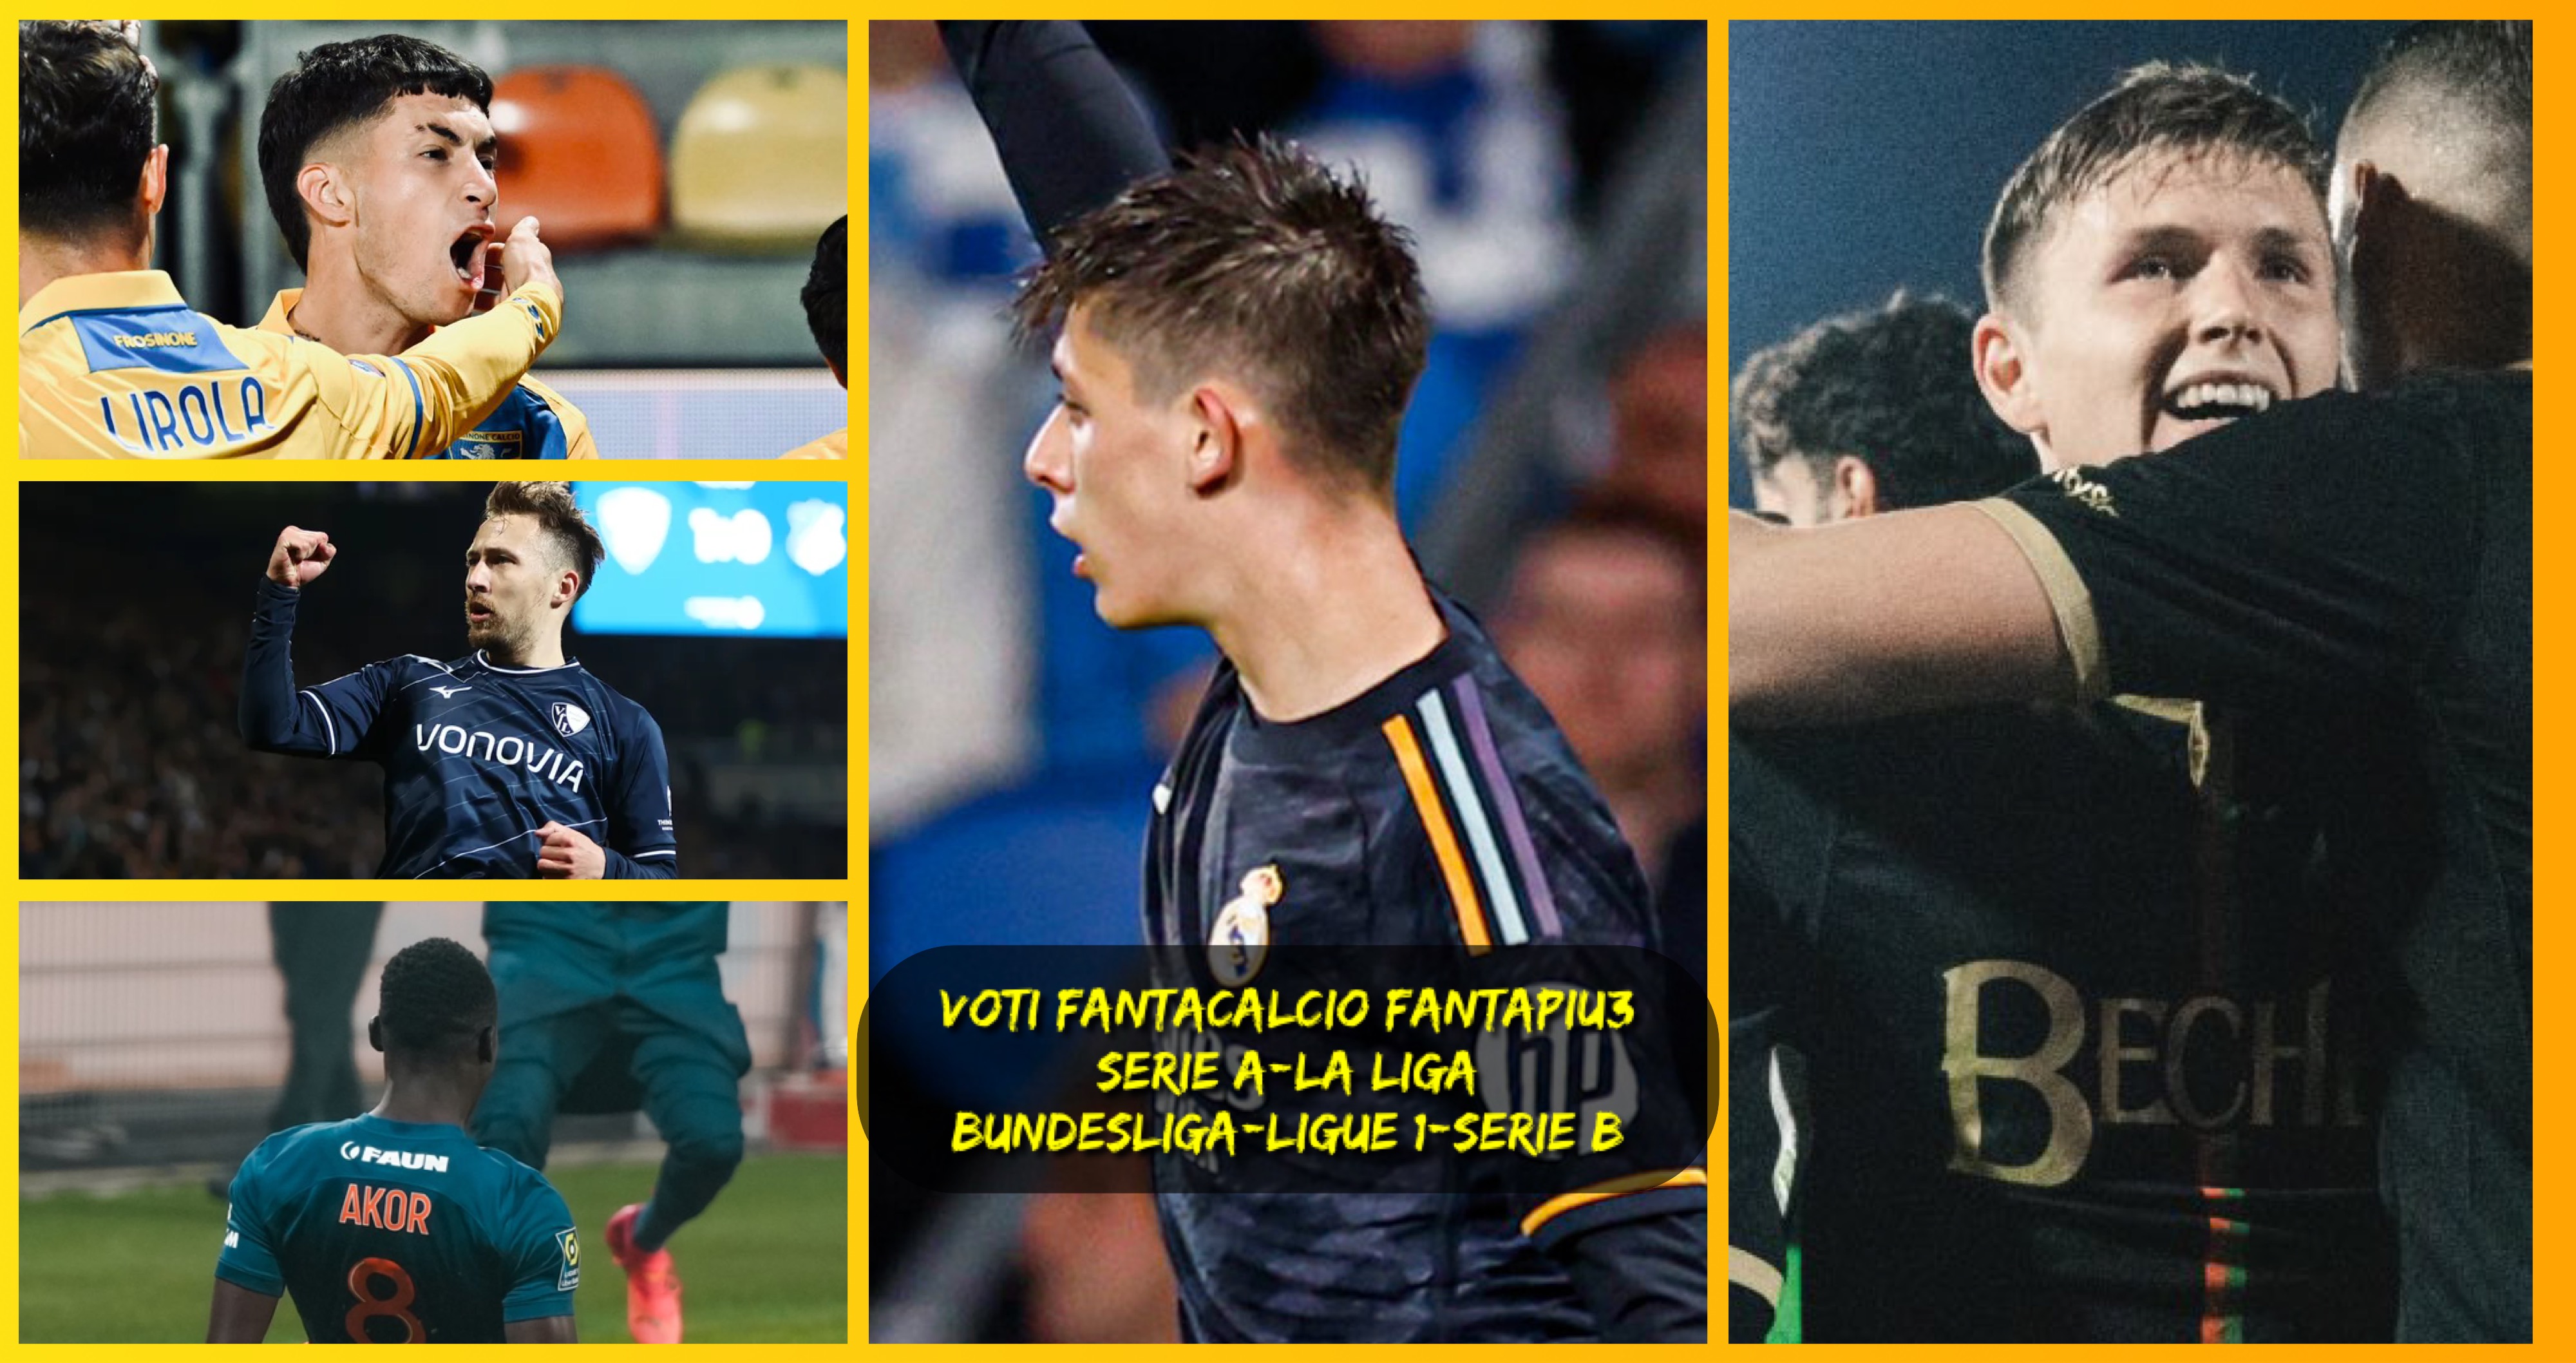 Voti fantacalcio Fantapiu3 per Serie A, La Liga, Bundesliga, Ligue 1 e Serie B